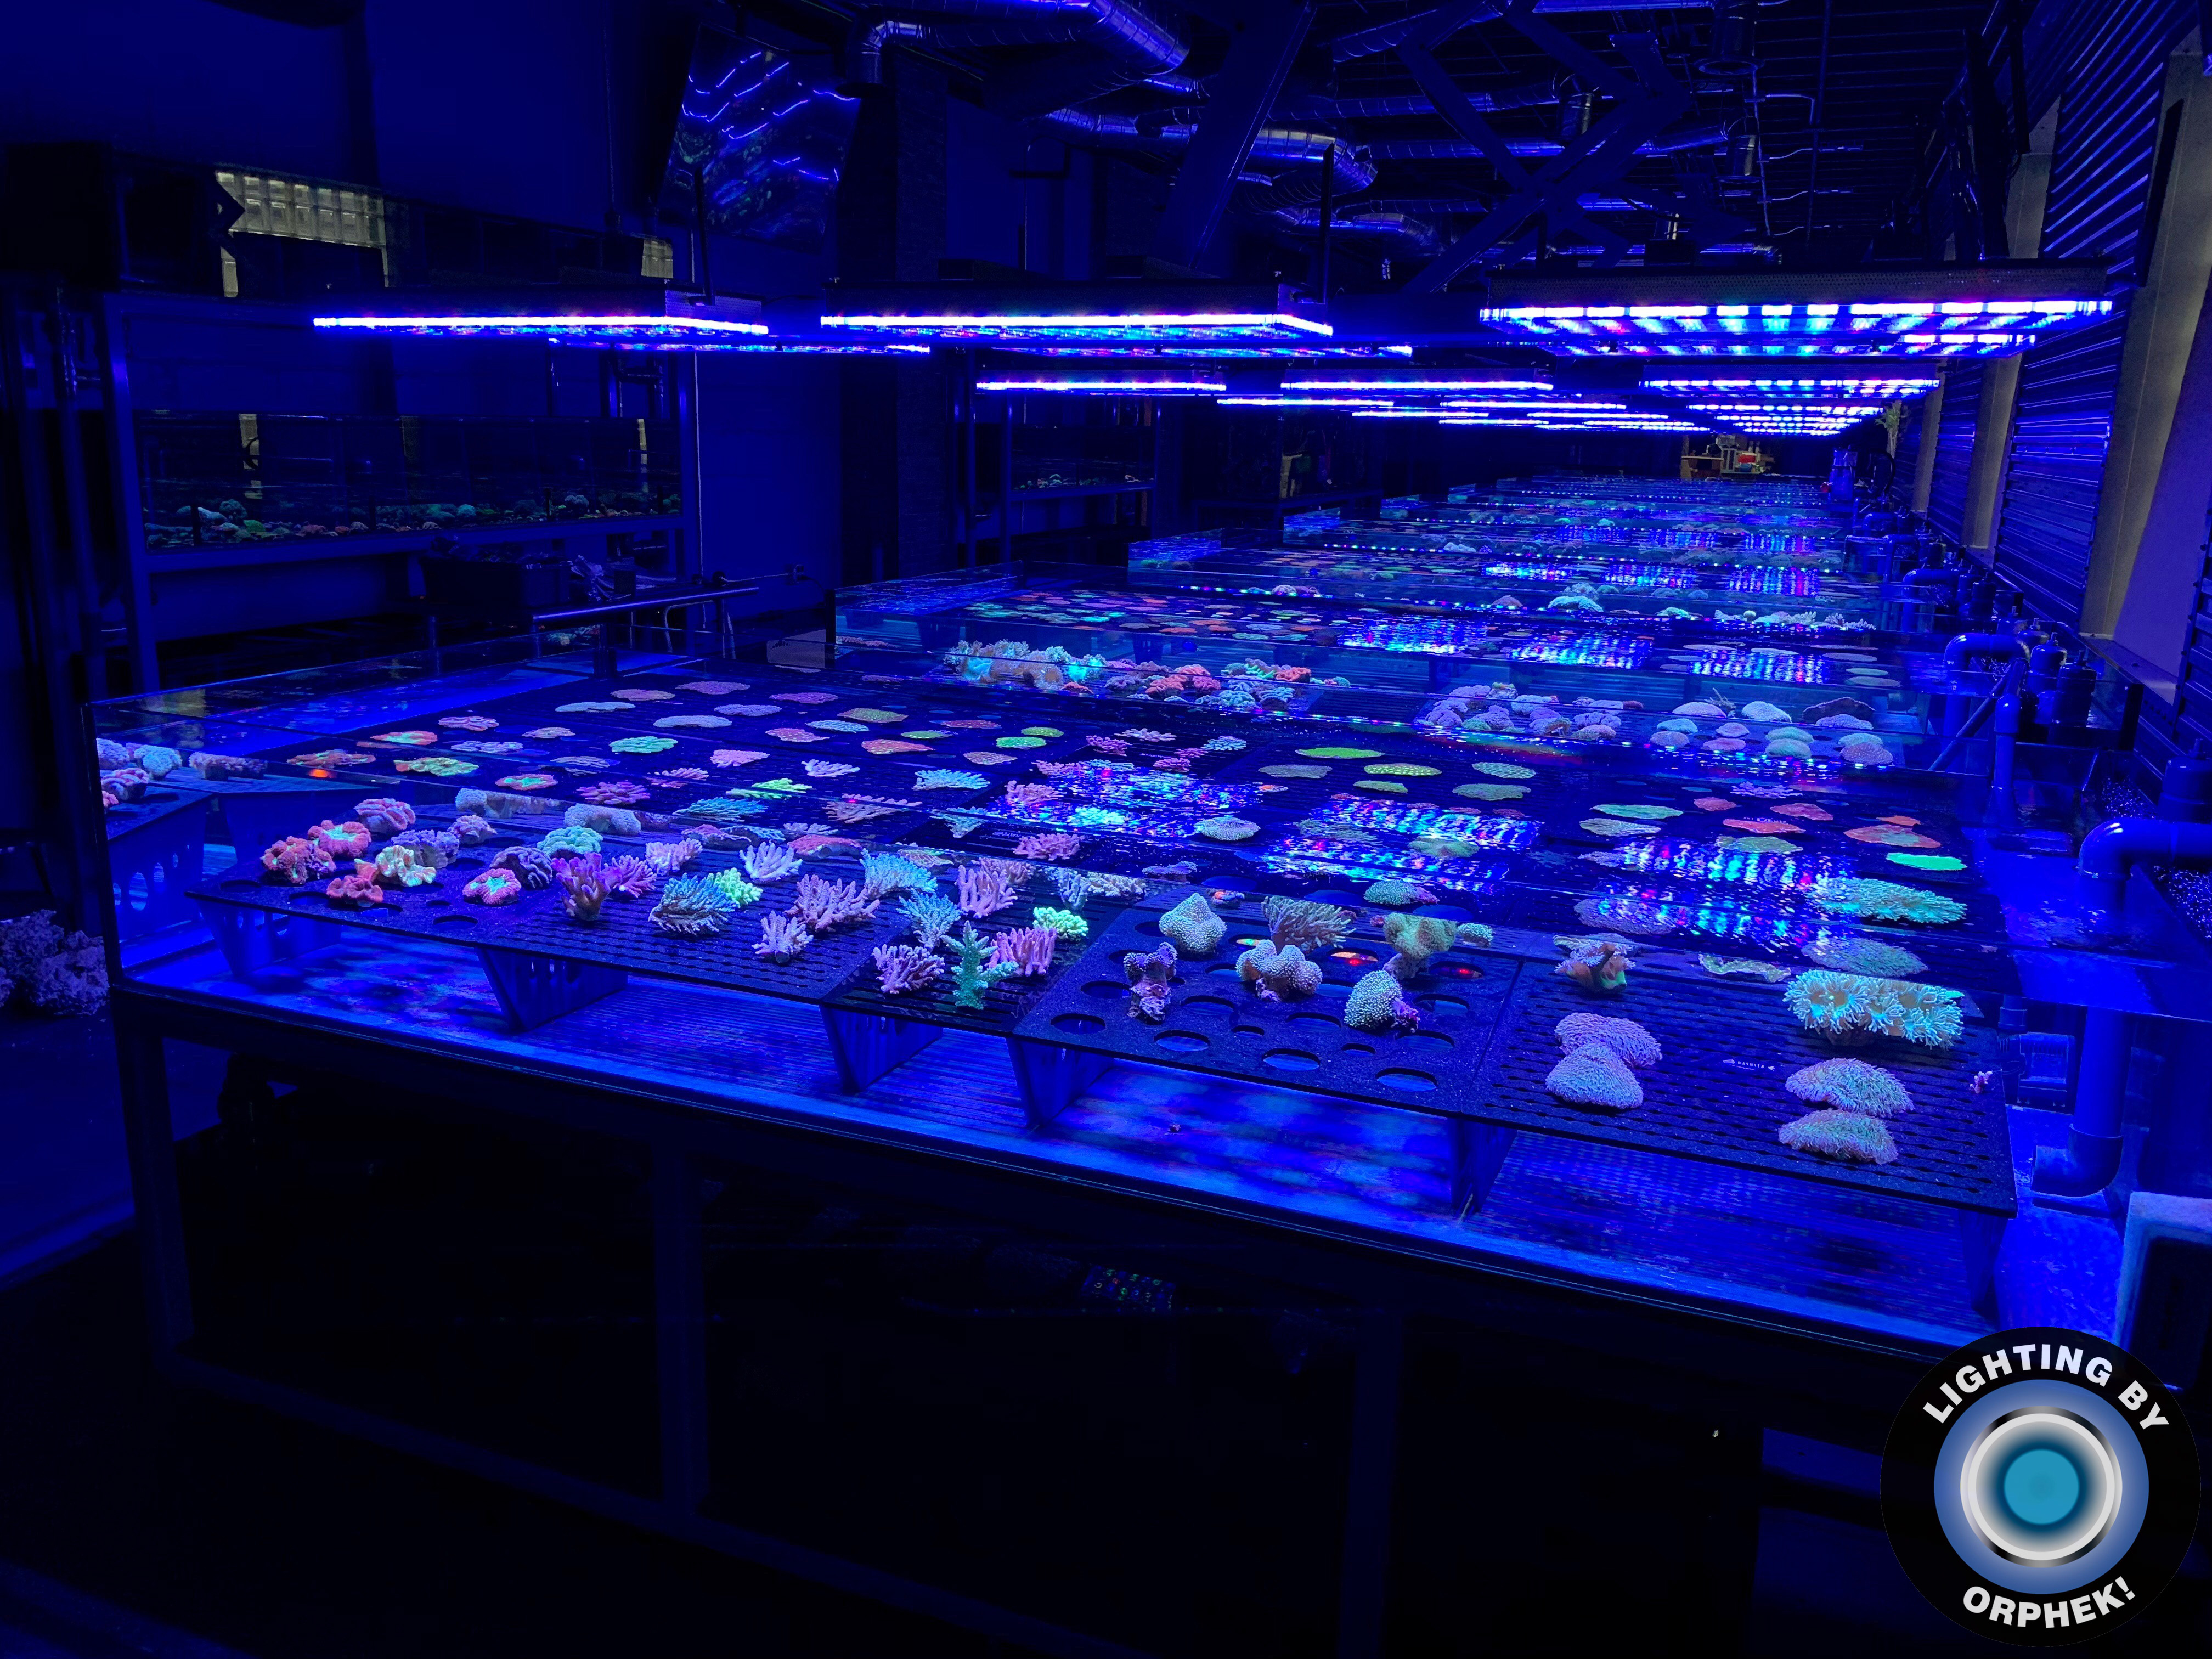 paras riutta akvaario LED-valaistus 2020